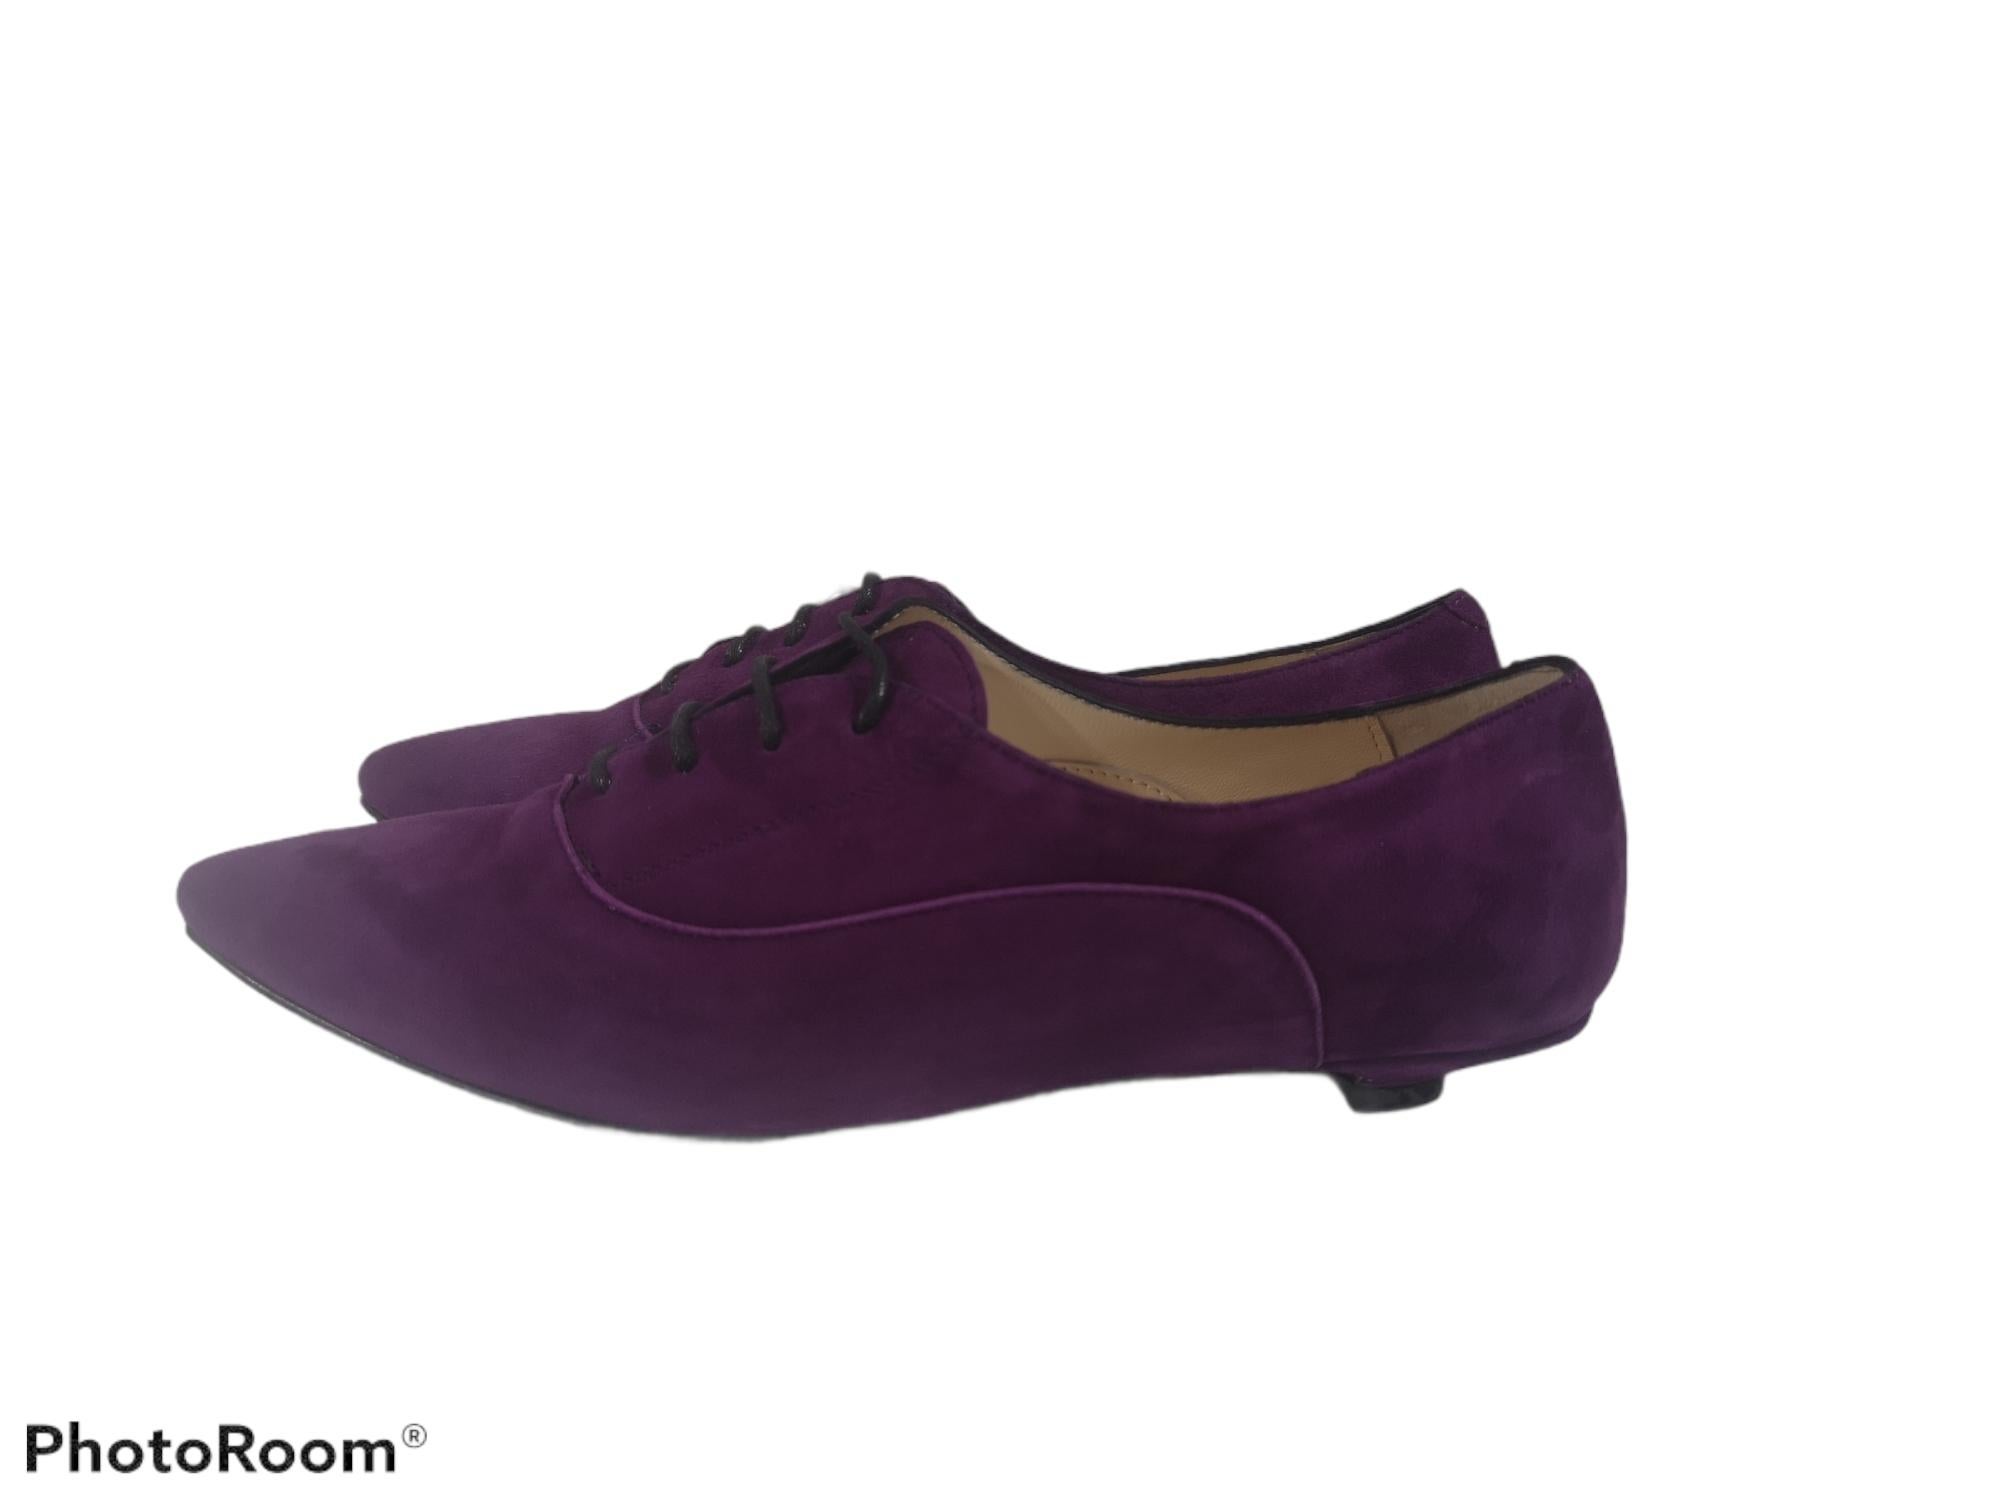 Black Purple suede ankle boot NWOT